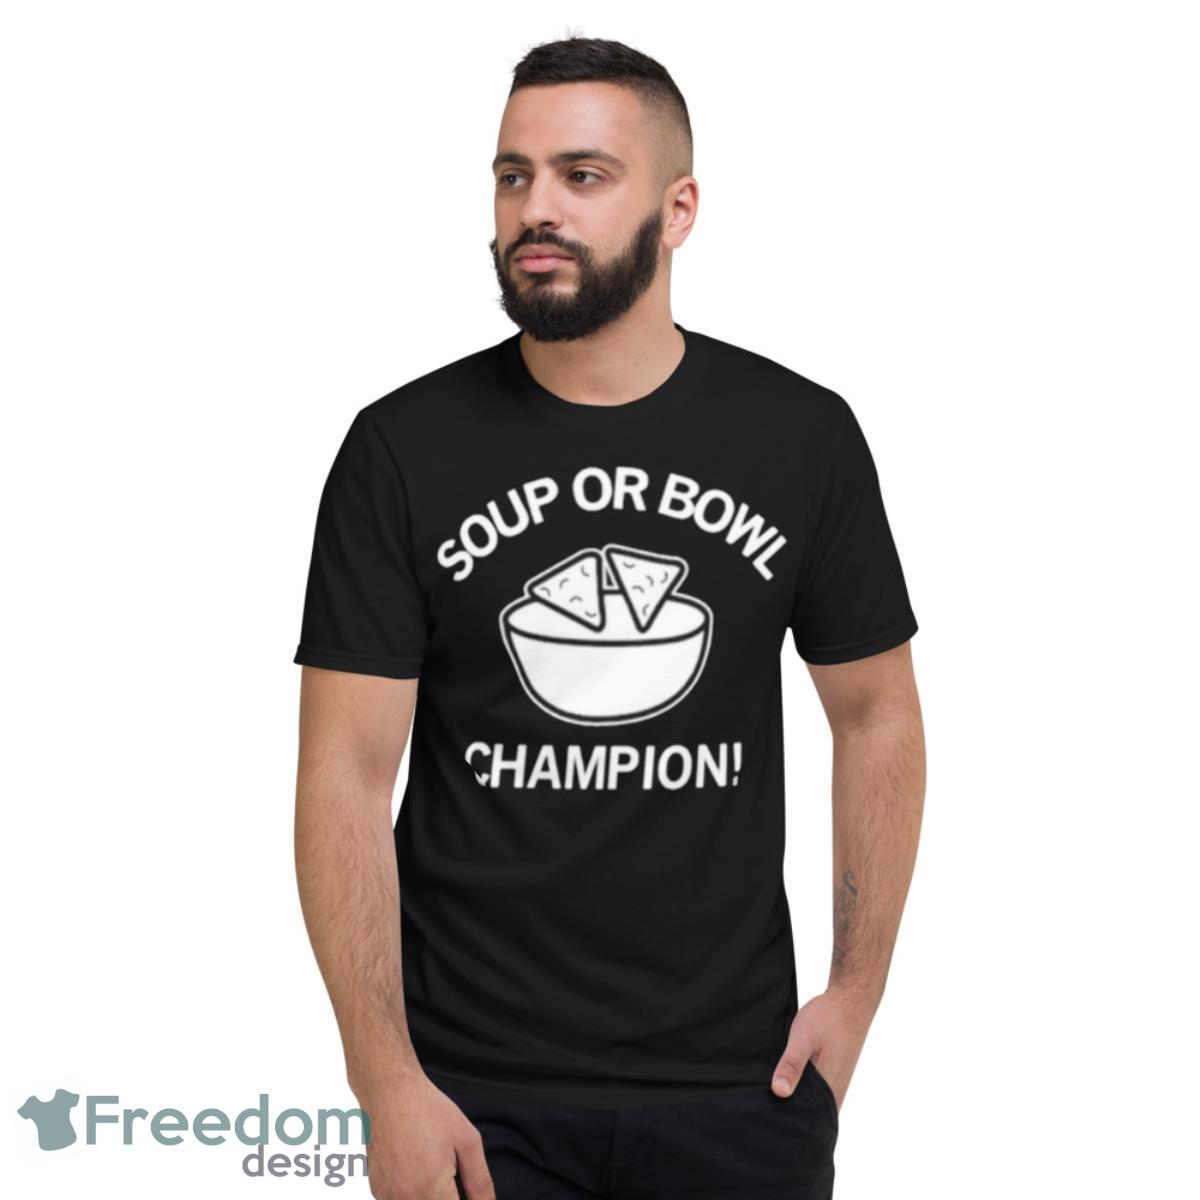 Soup or bowl Champion shirt